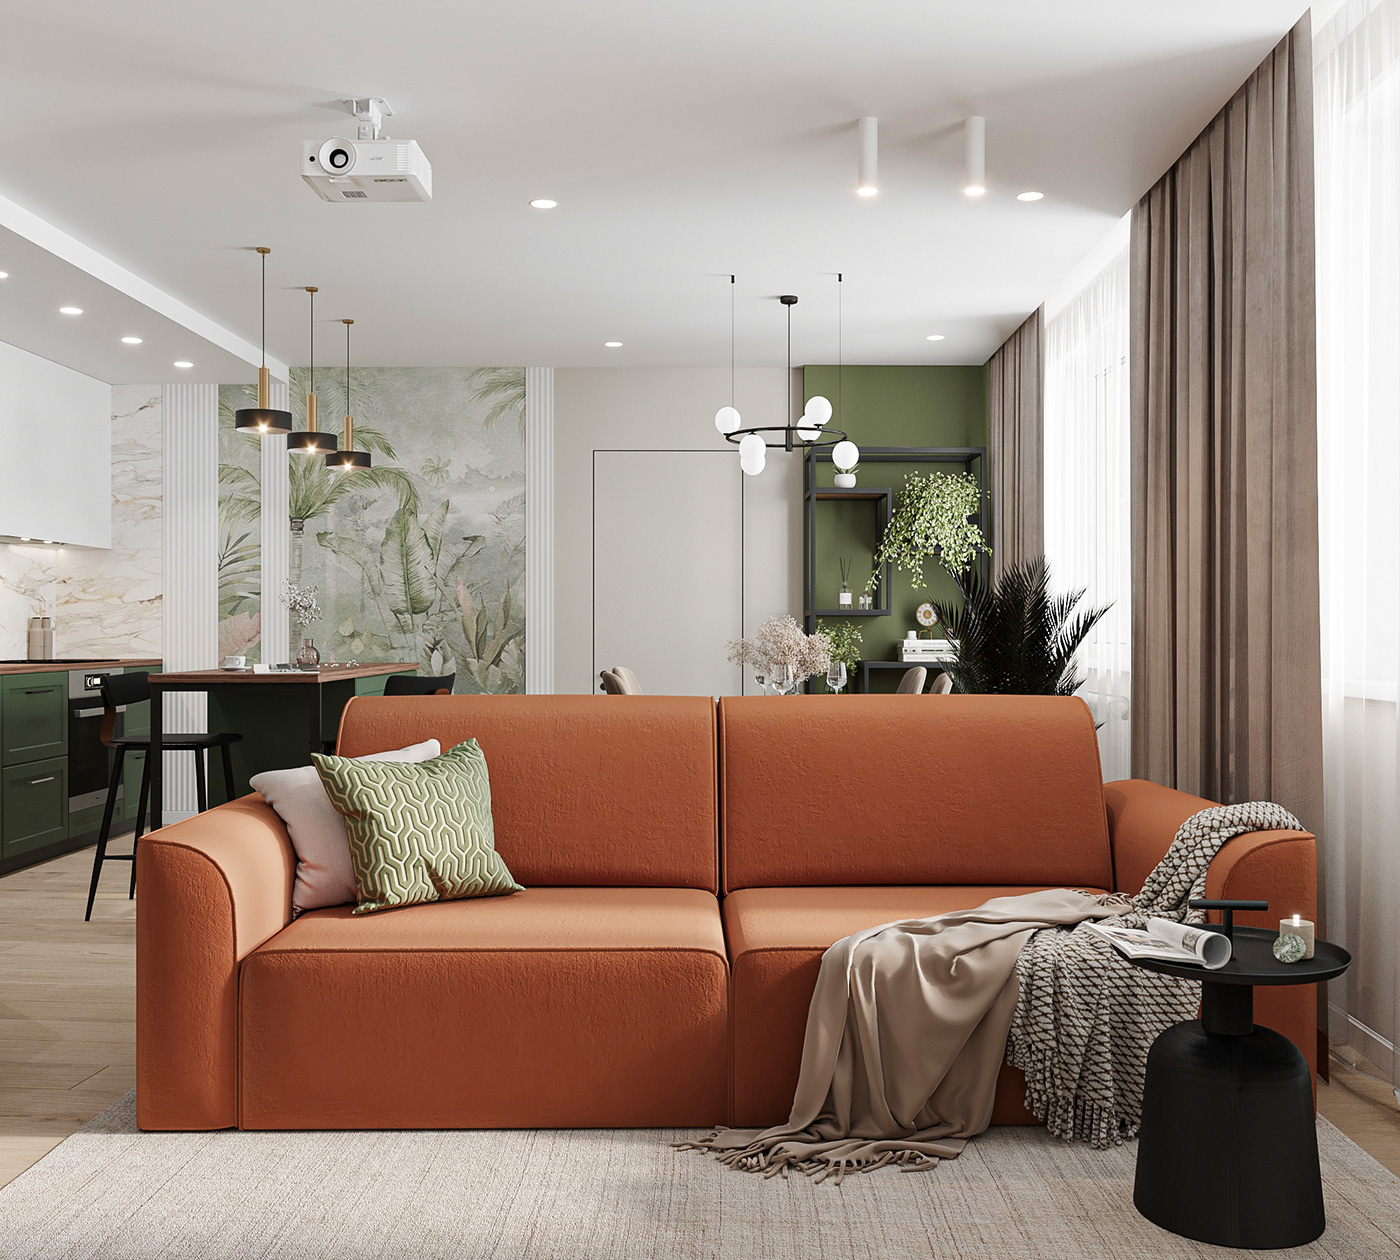 3dmax 3ds max corona corona render  Interior interior design  kitchen living room Render visualization